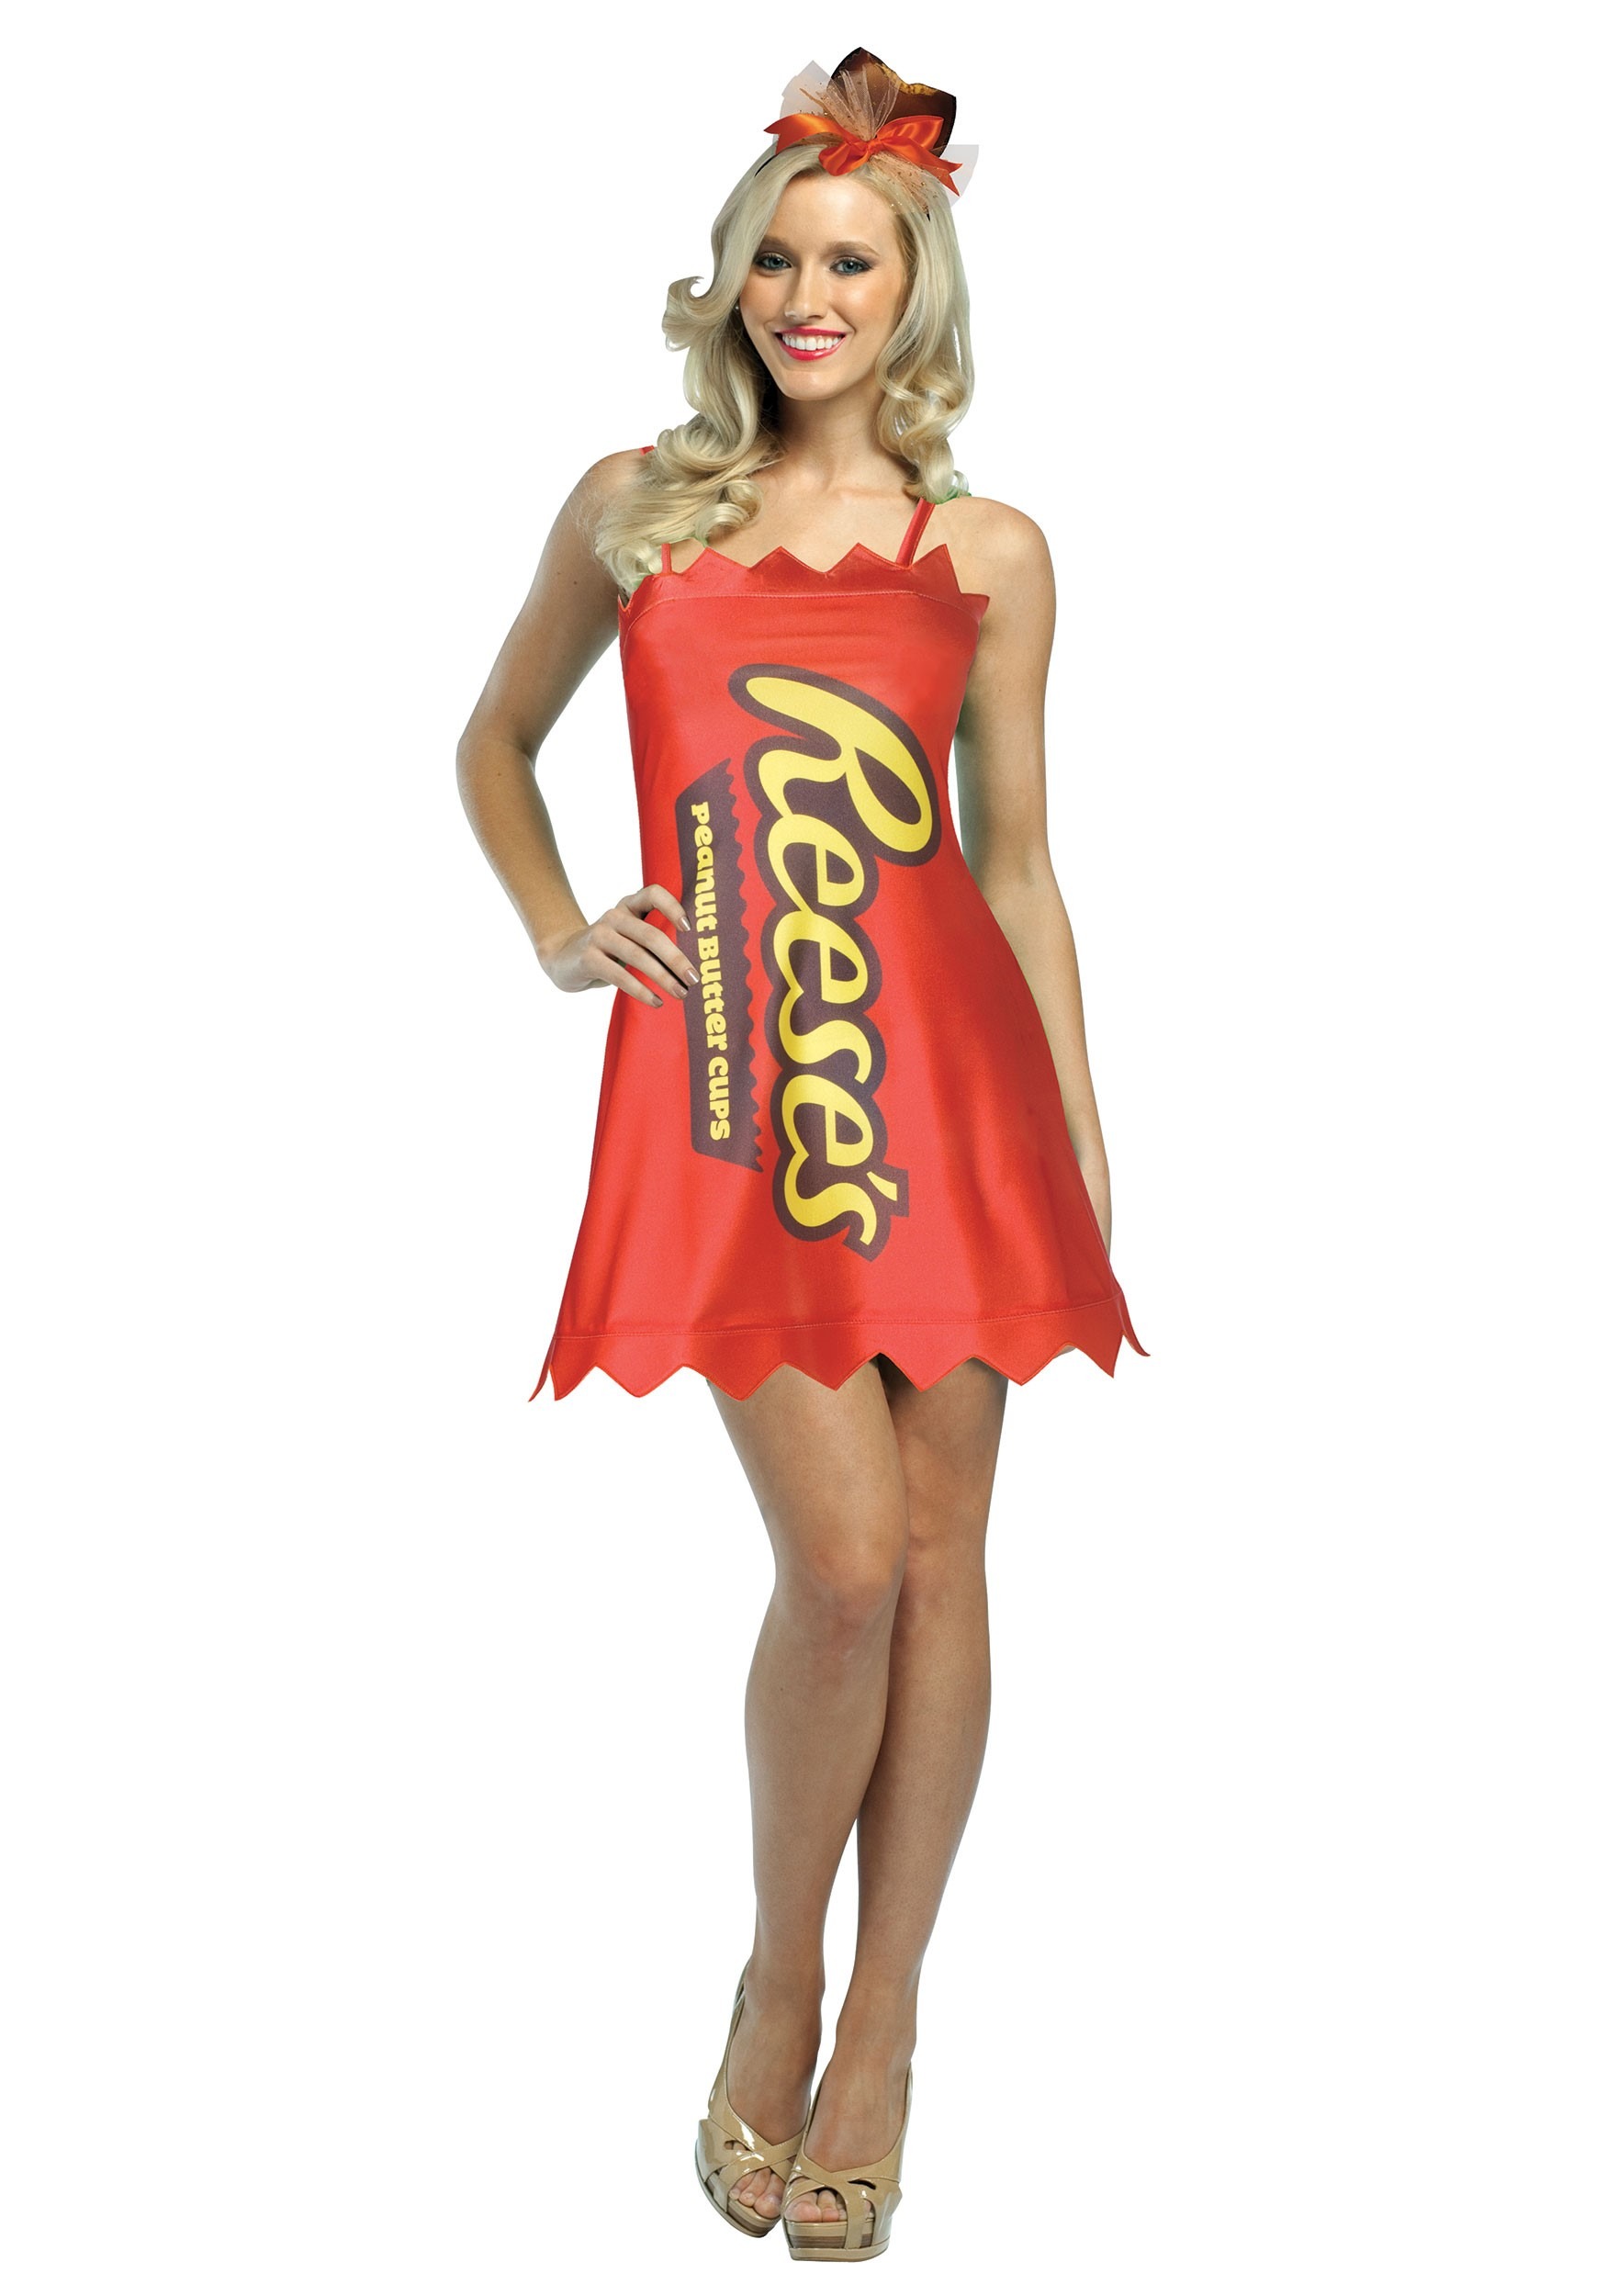 Reese's Women's Reese's Cup Fancy Dress Costume